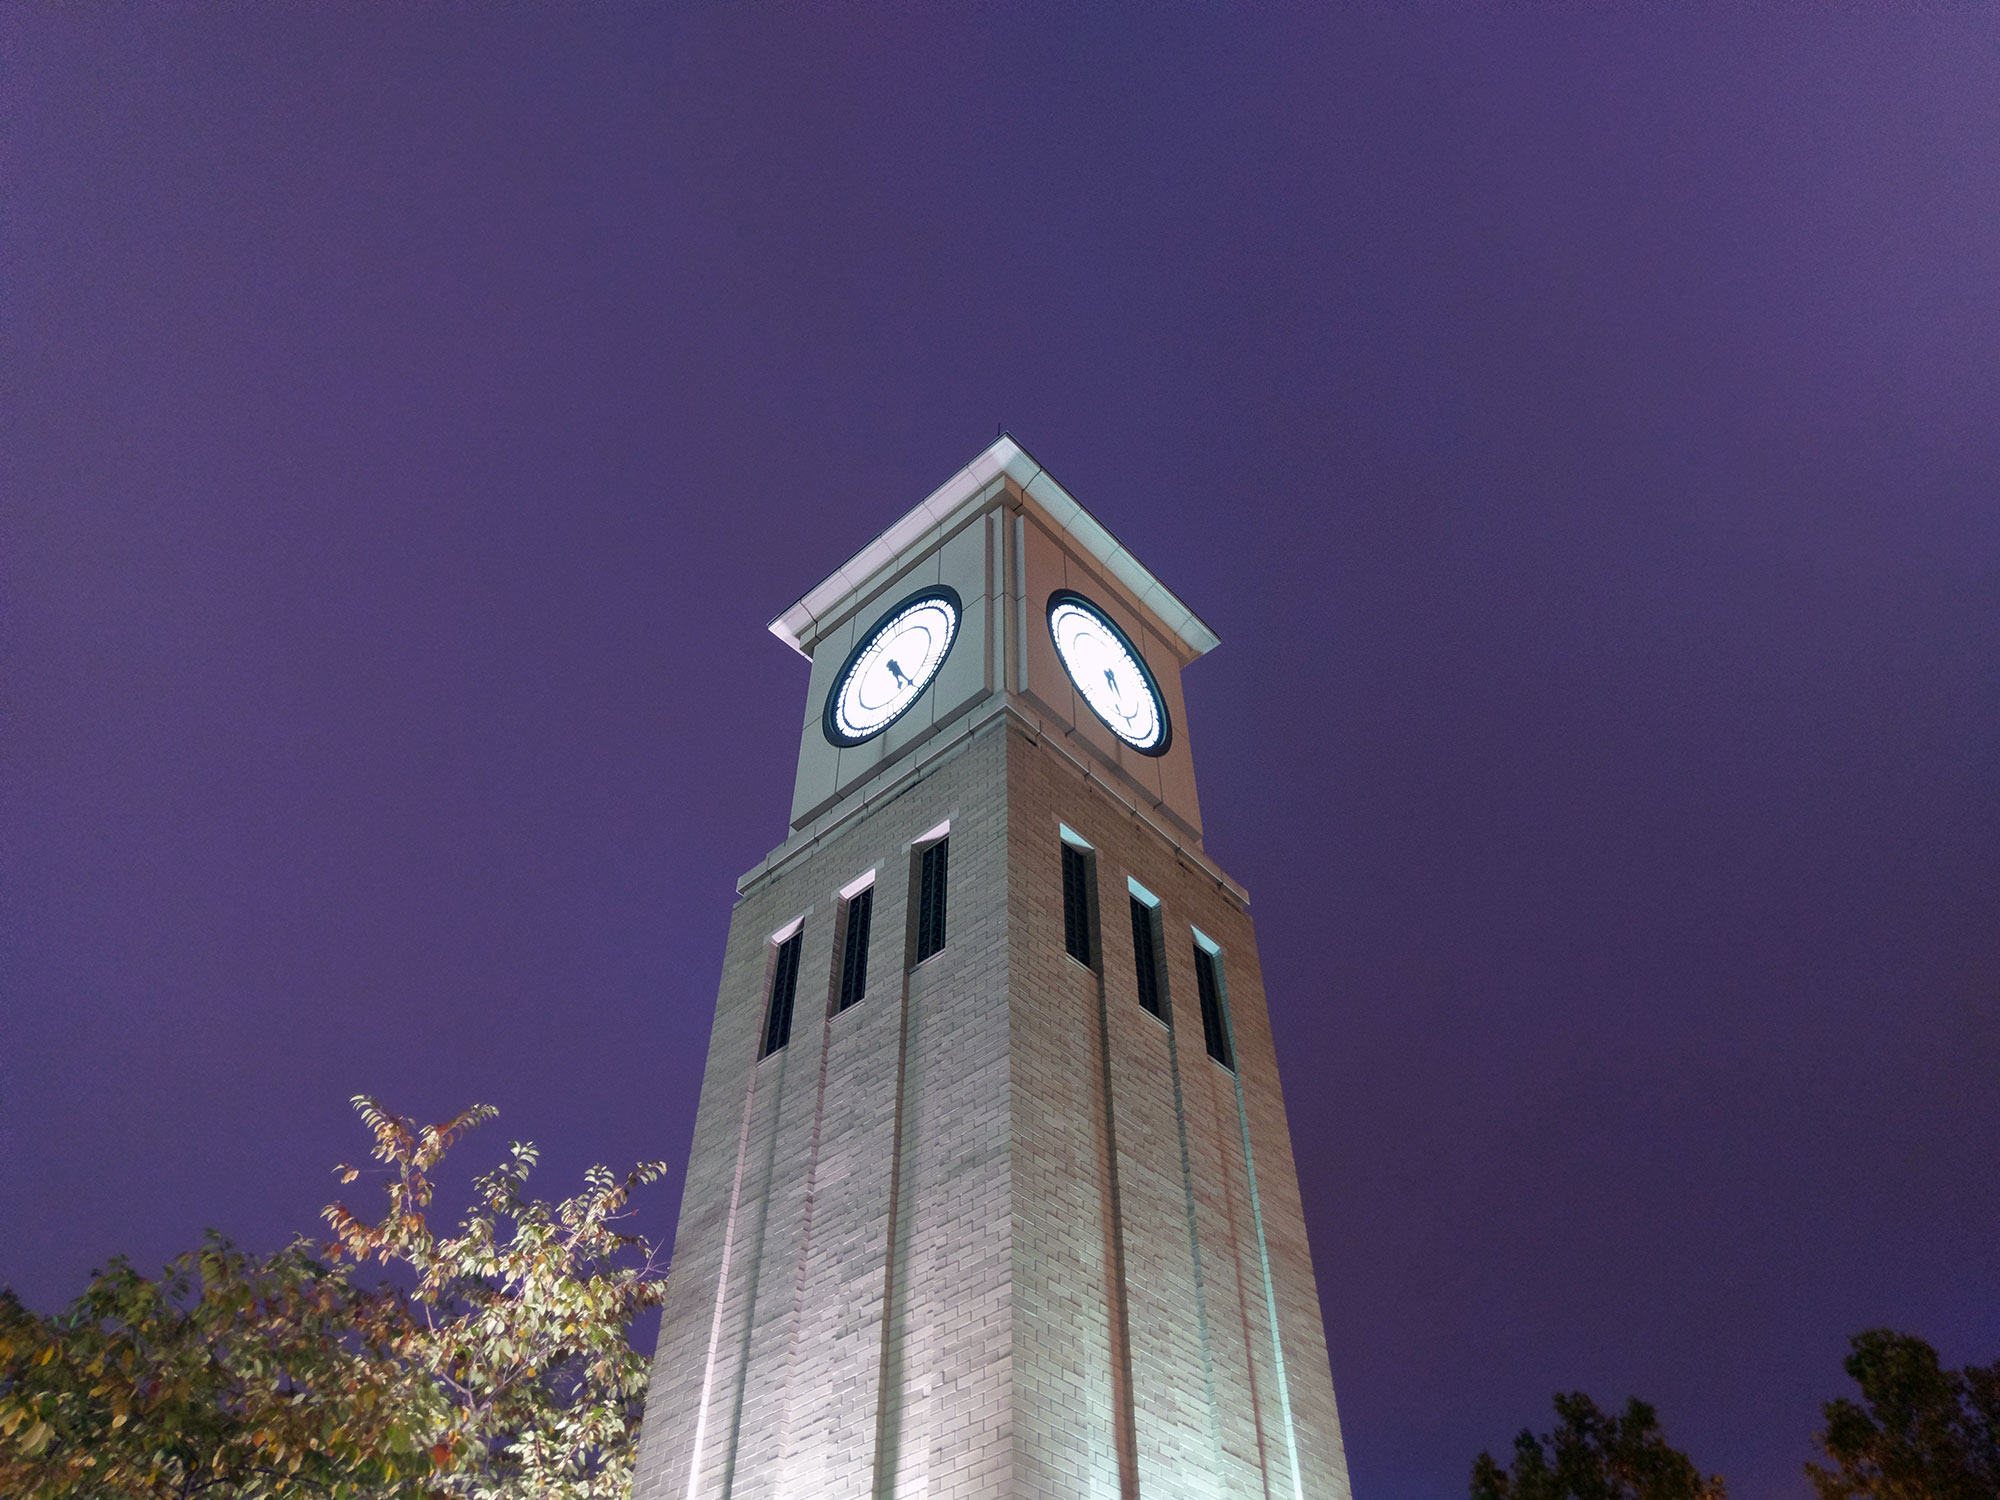 The clocktower at Georgetown Law School.